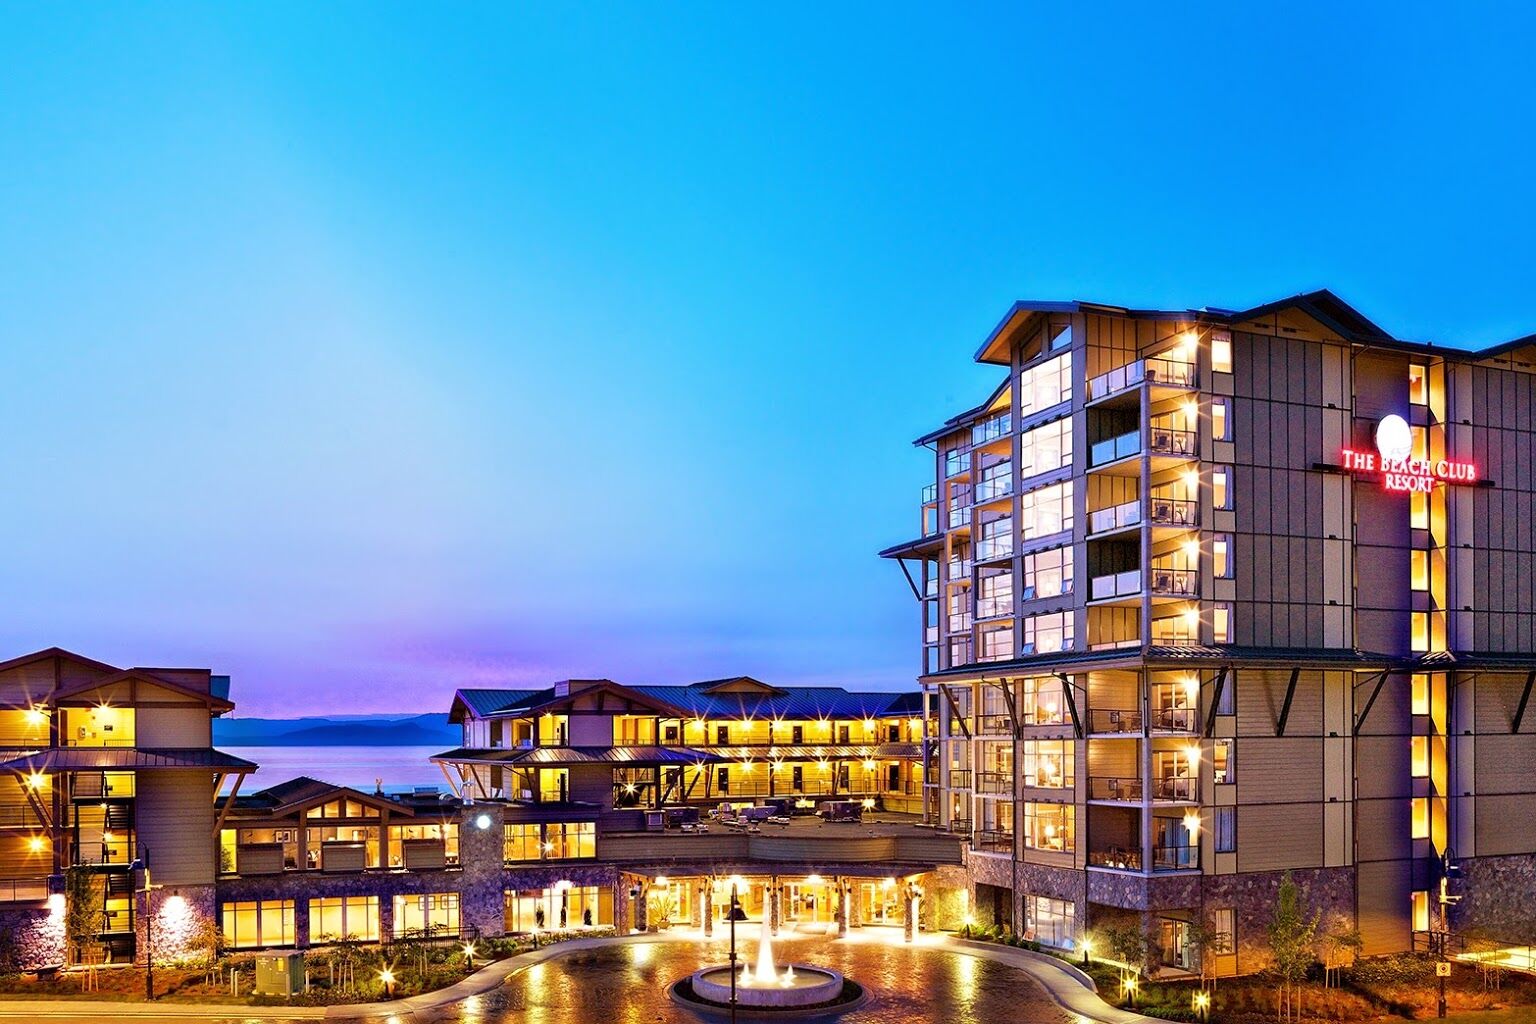 The Beach Club Resort — Bellstar Hotels & Resorts Parksville Exterior photo